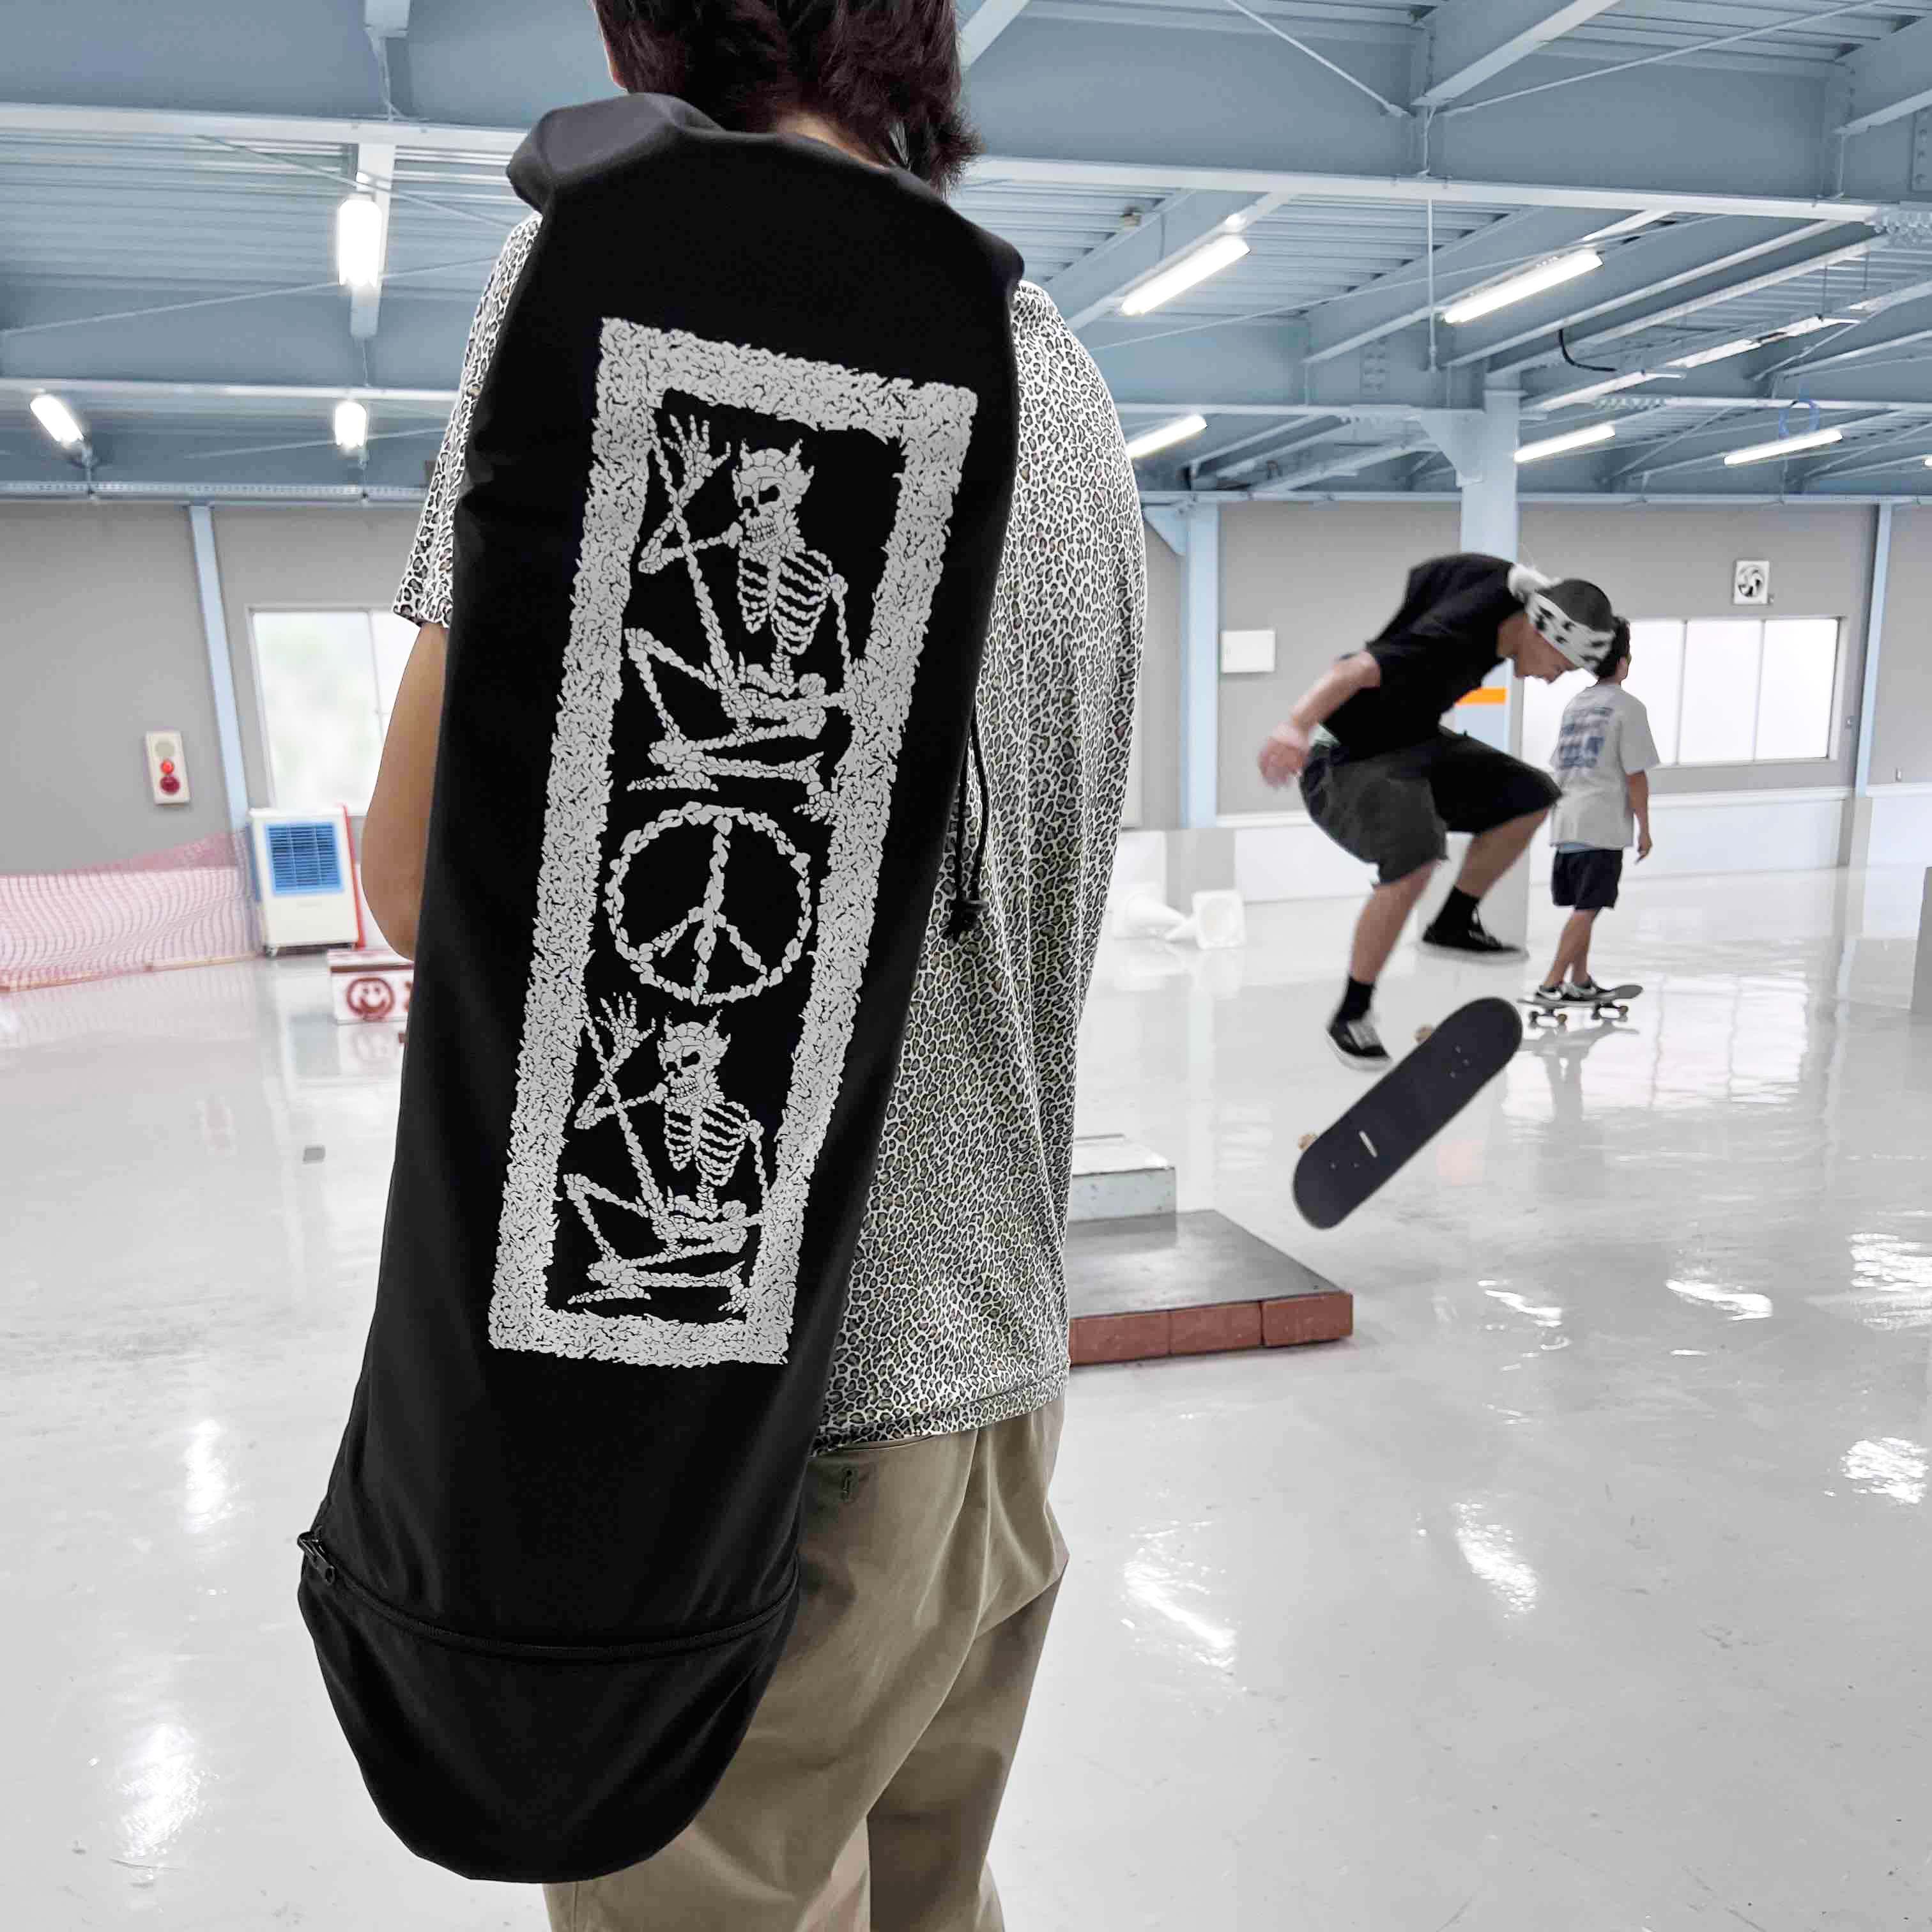 Skate Packable Bag (品番CPSEW-013)